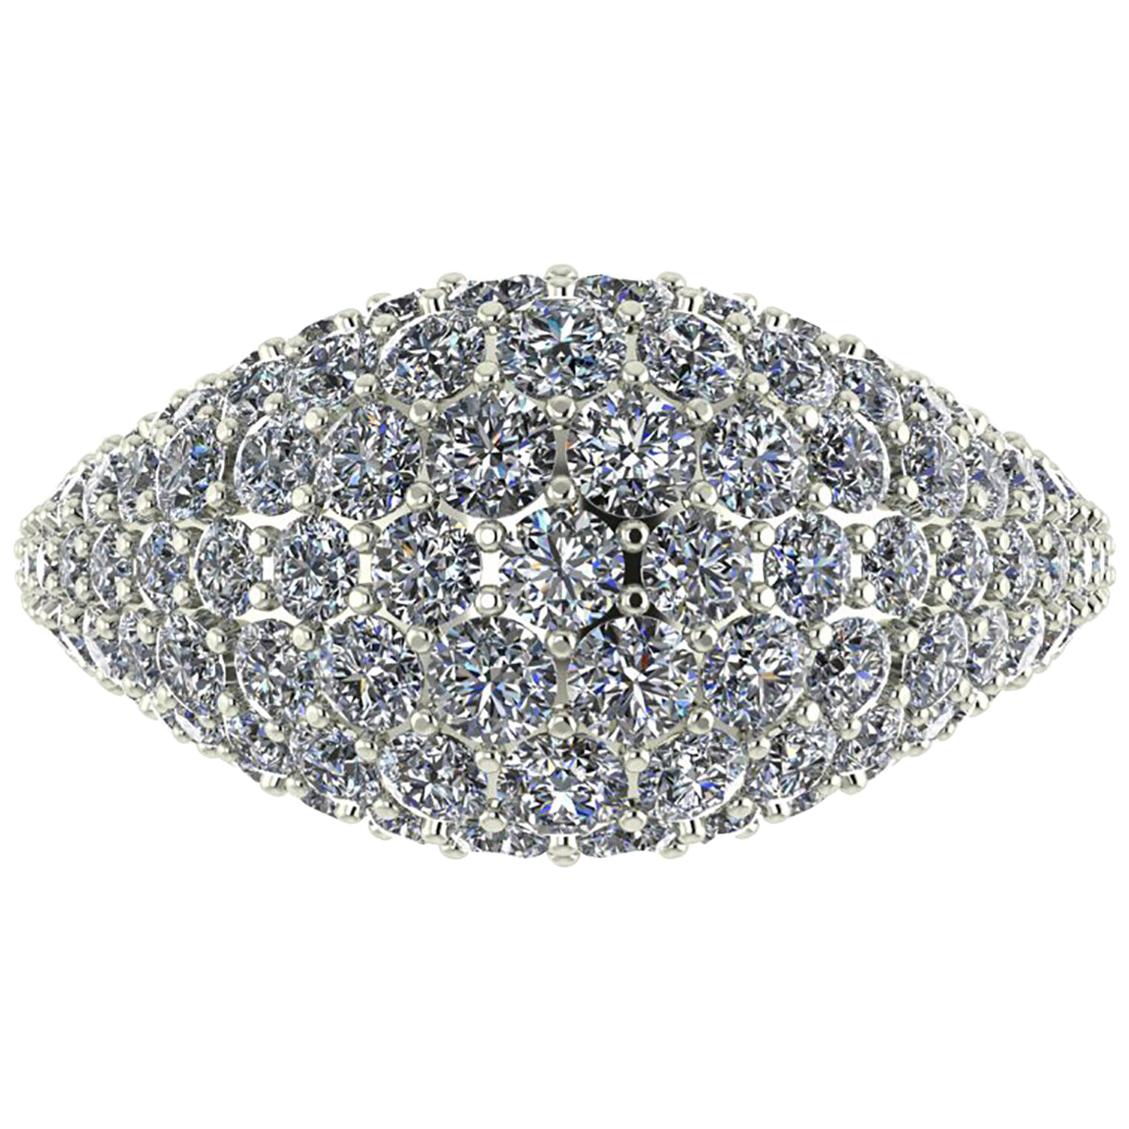  2.5 Carat White Bright Diamonds Dome Ring in 18 Karat white Gold For Sale